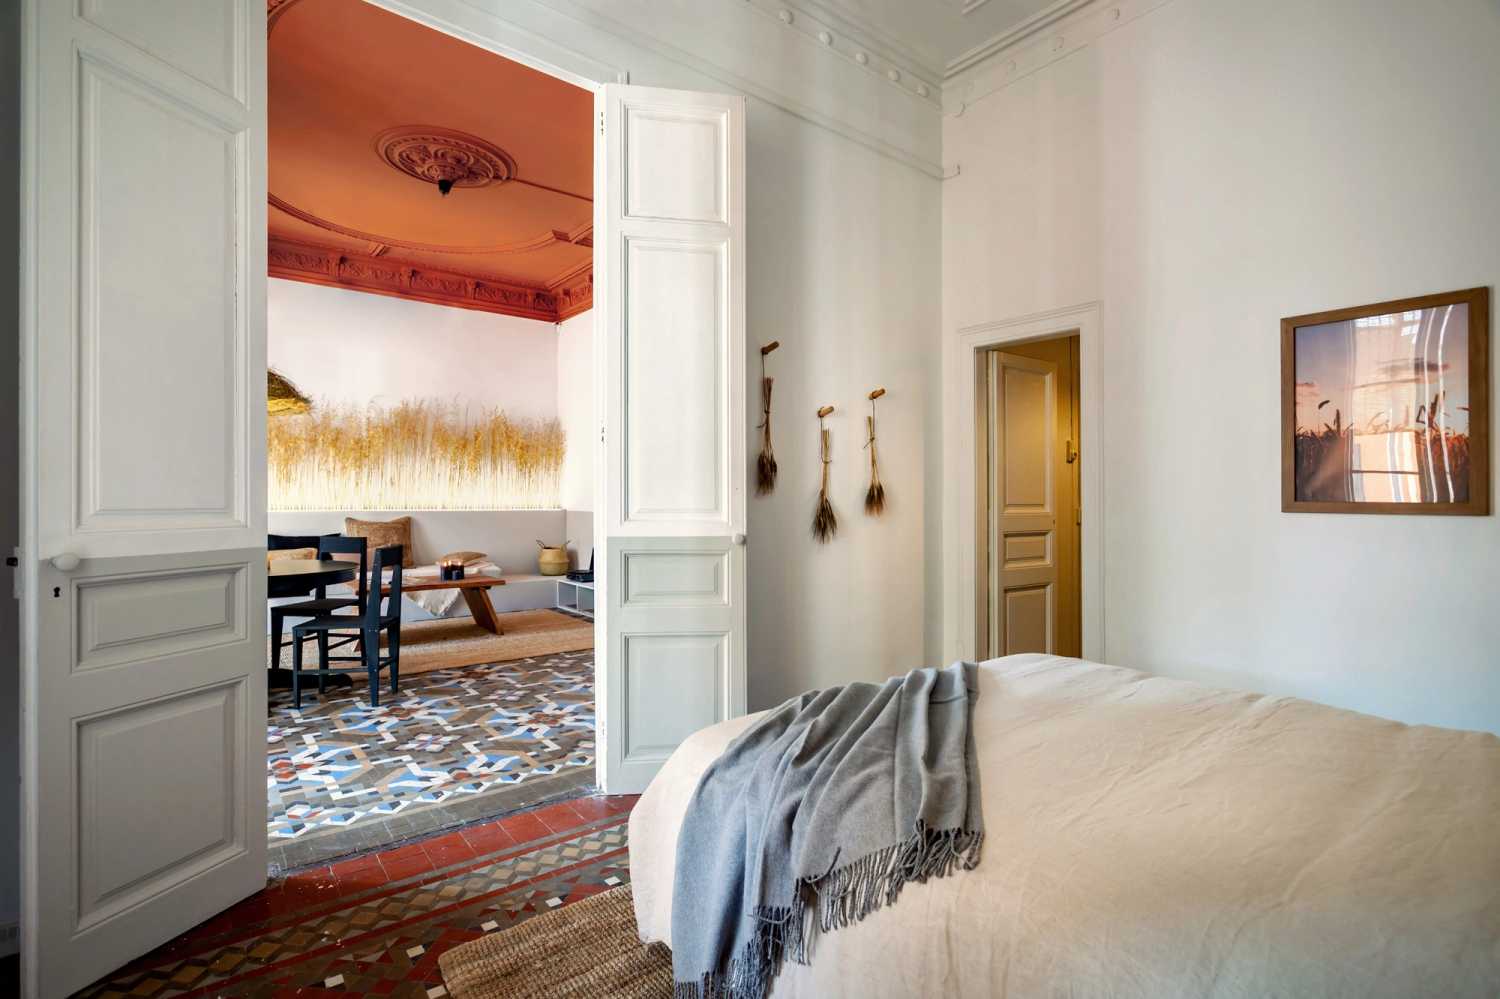 1654163708-fully-furnished-bedroom-to-rent-barcelona-ukio-318-l-11copy-1.jpg